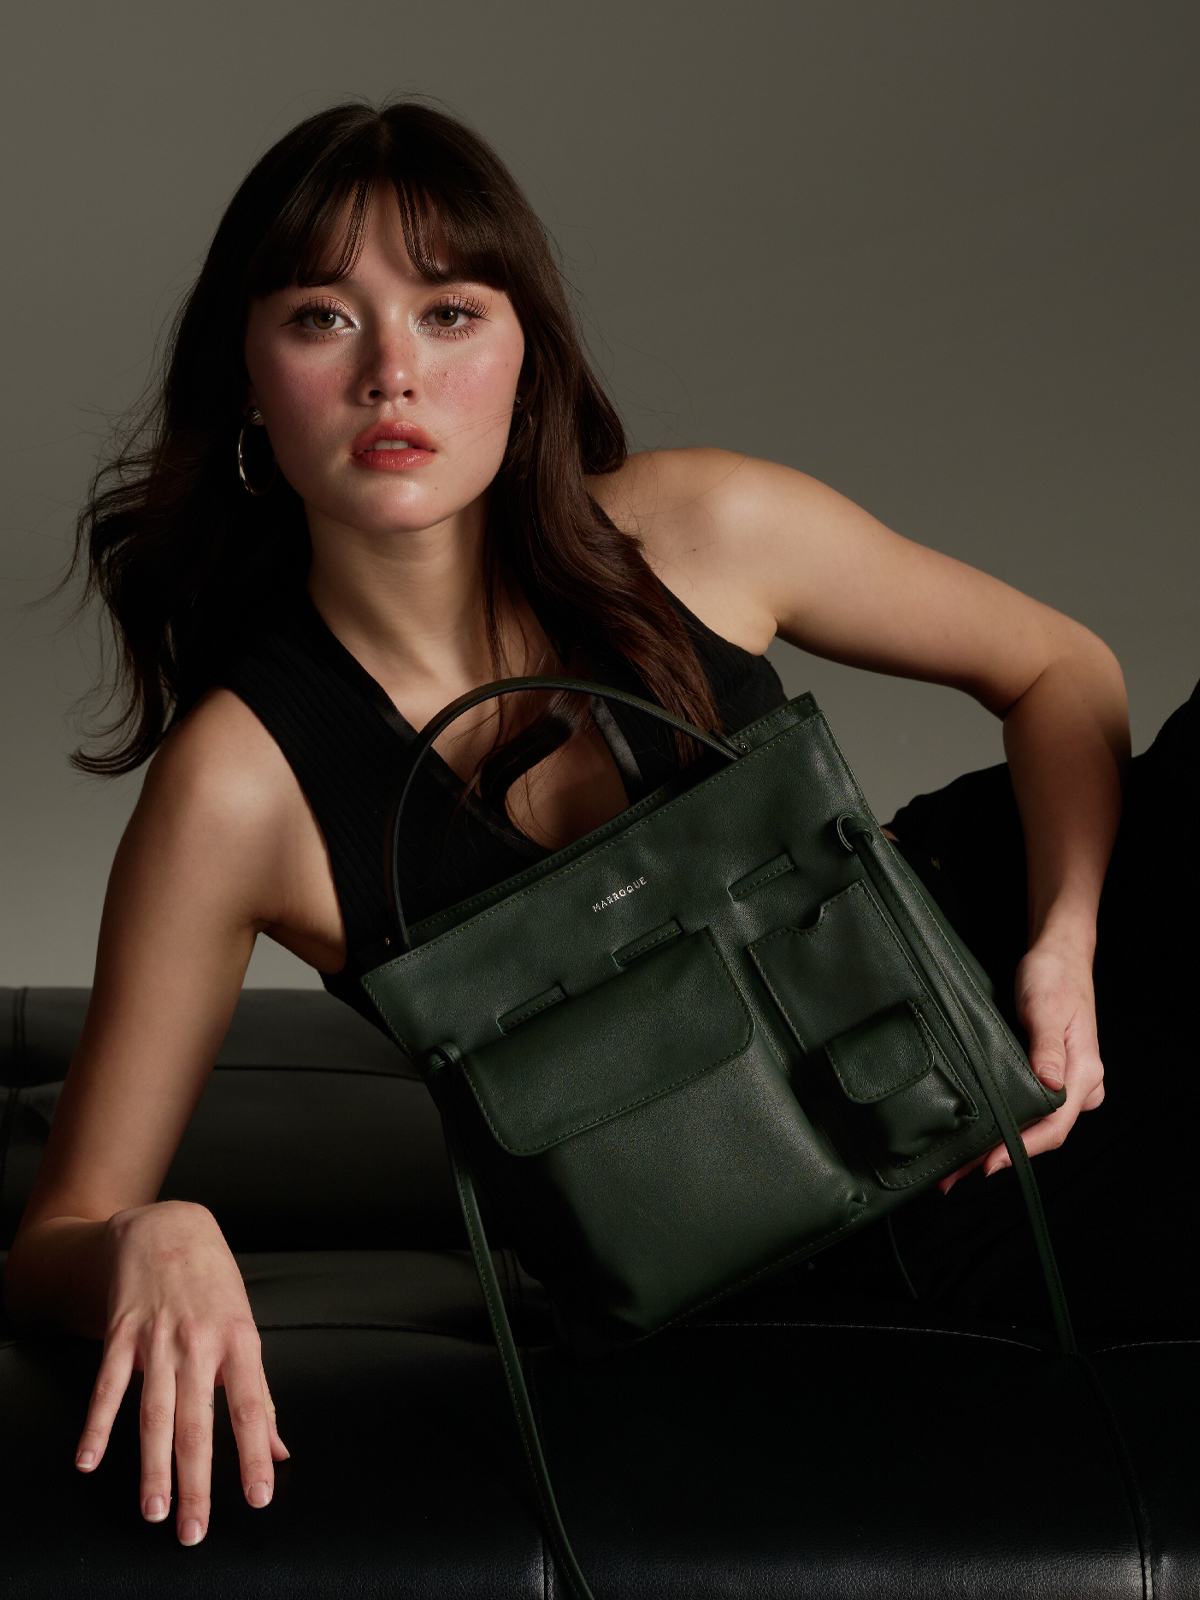 Marroque wendy 28 genuine leather bag crossbody bag in Dark Green